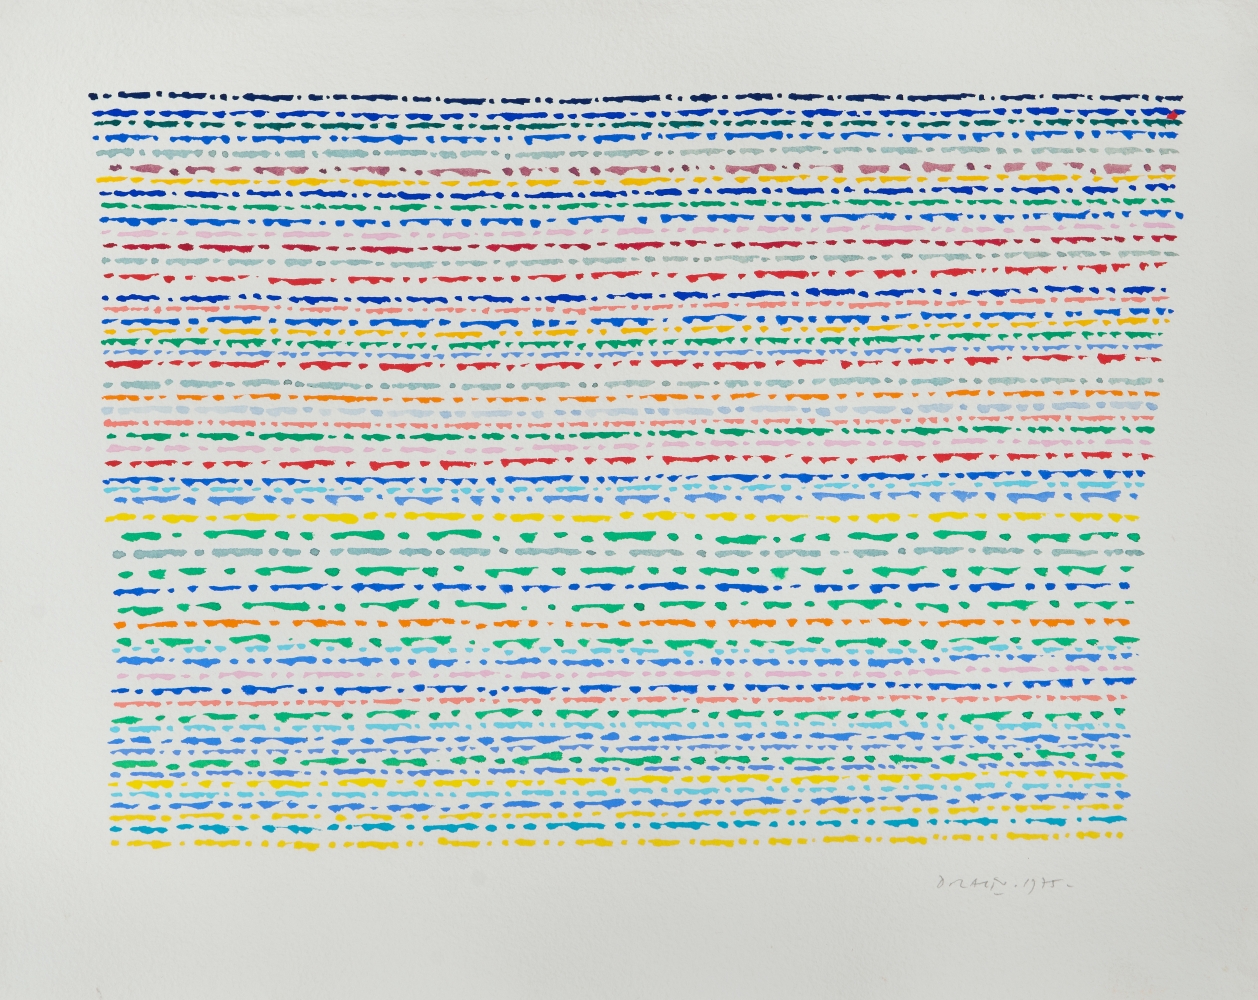 Piero Dorazio (1927&amp;ndash;2005)

(Colored Lines), 1975

Watercolor on paper

16 3/4 x 21 in. (42.6 x 53.3 cm)

Signed and dated lower right:&amp;nbsp;Dorazio 1975